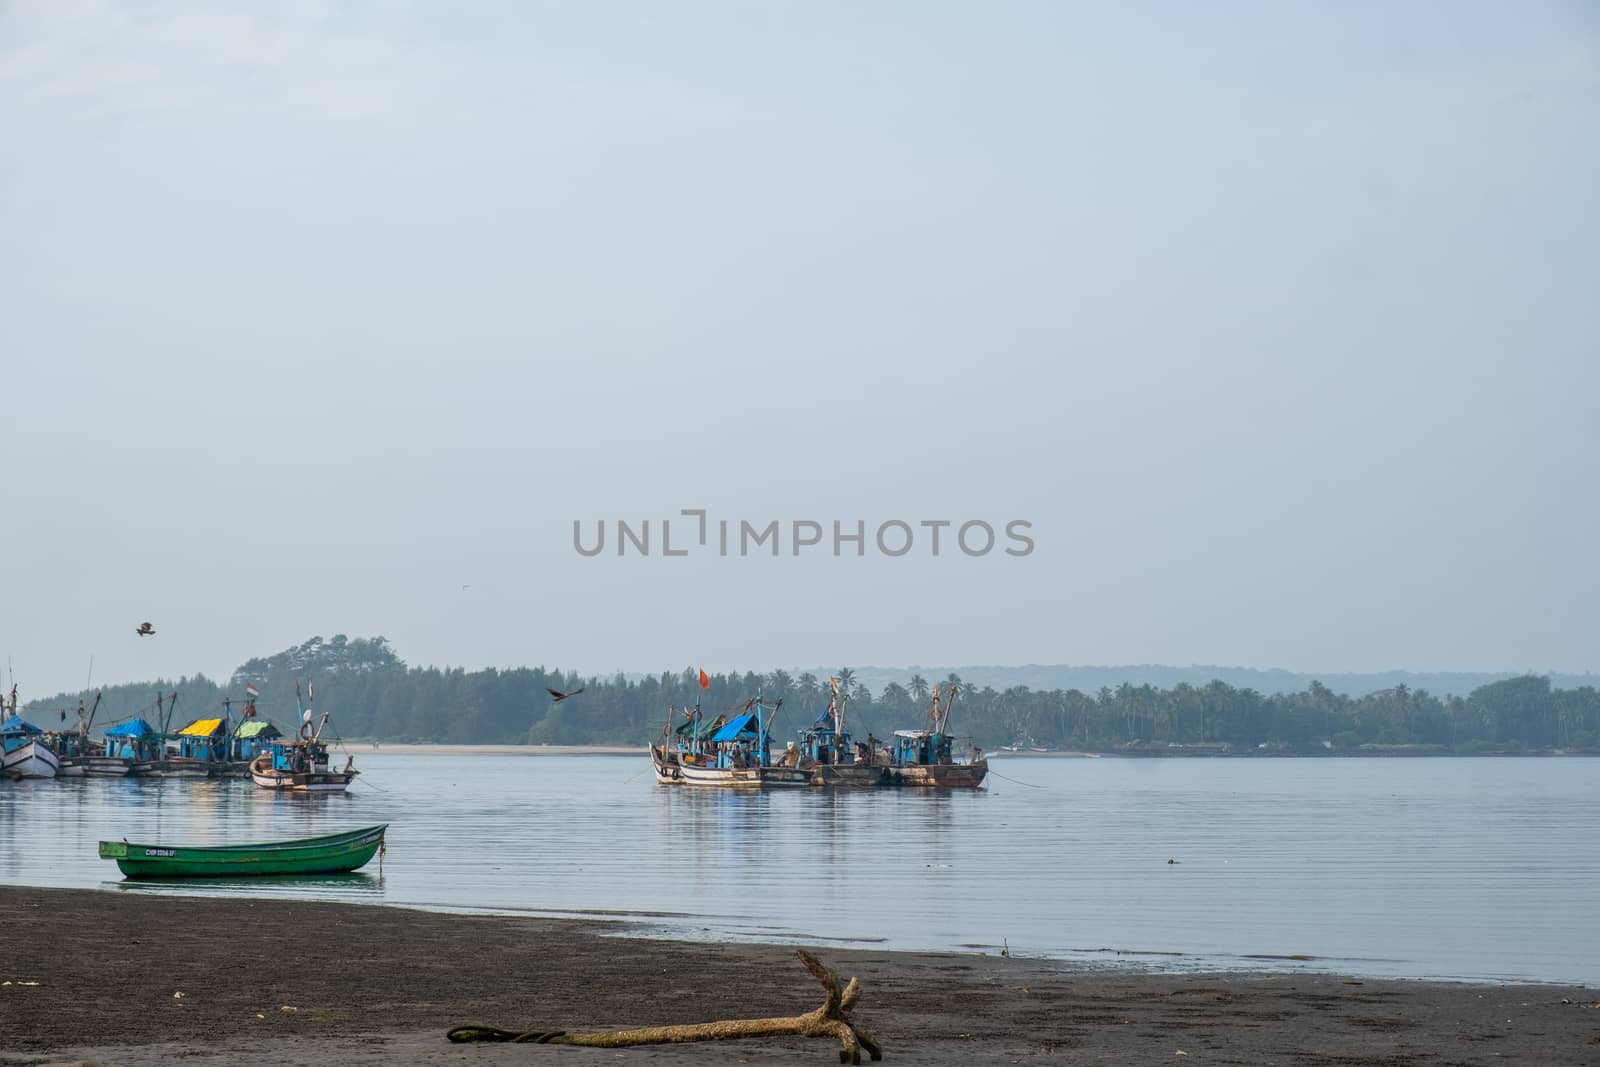 Fisherman village in Goa, India